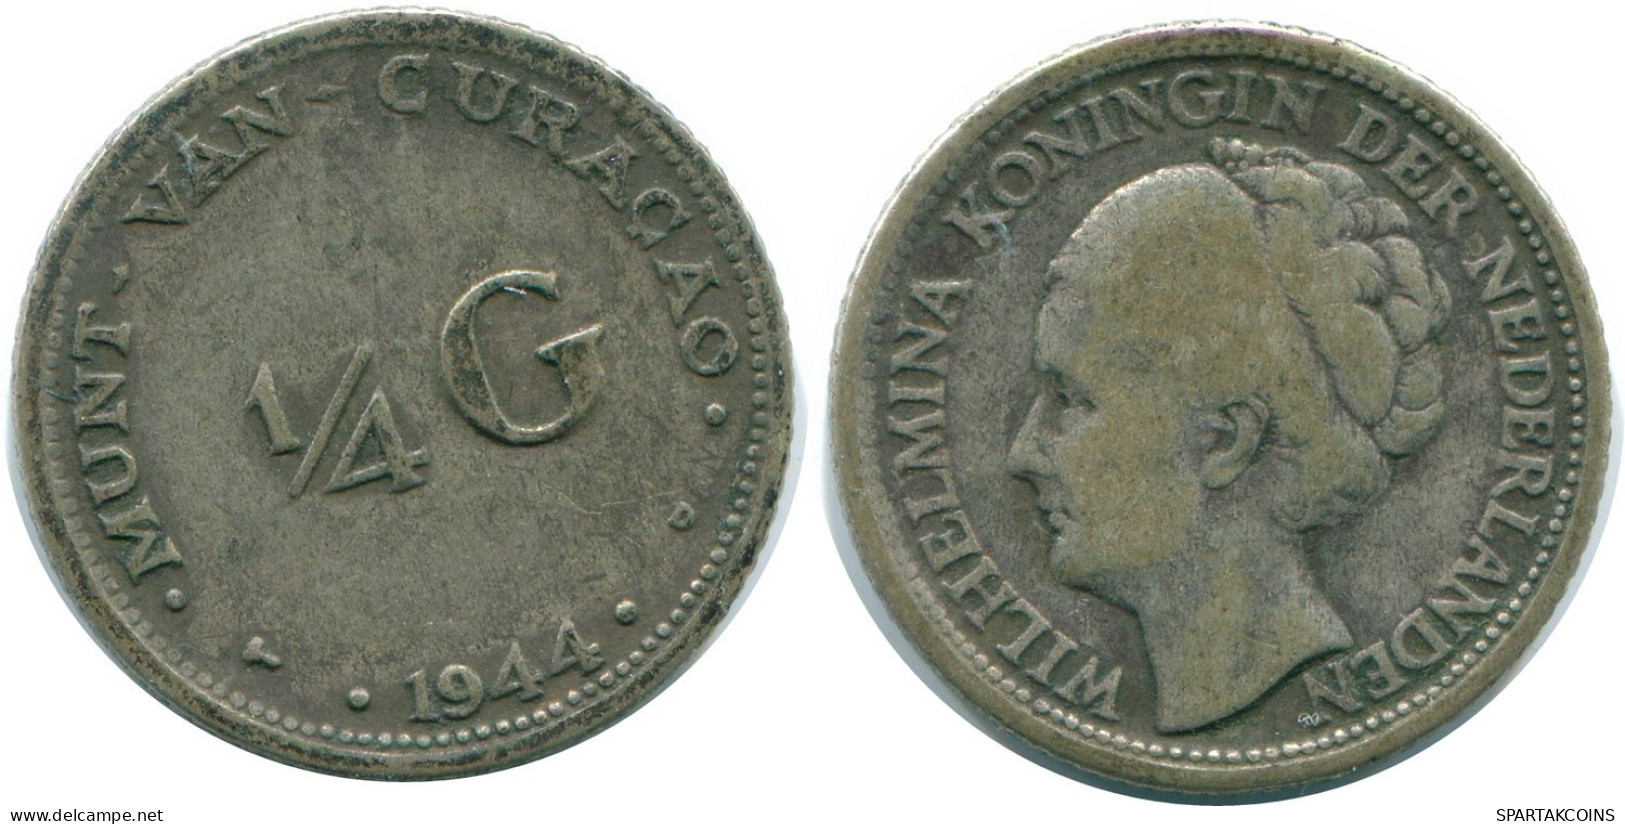 1/4 GULDEN 1944 CURACAO Netherlands SILVER Colonial Coin #NL10711.4.U.A - Curacao